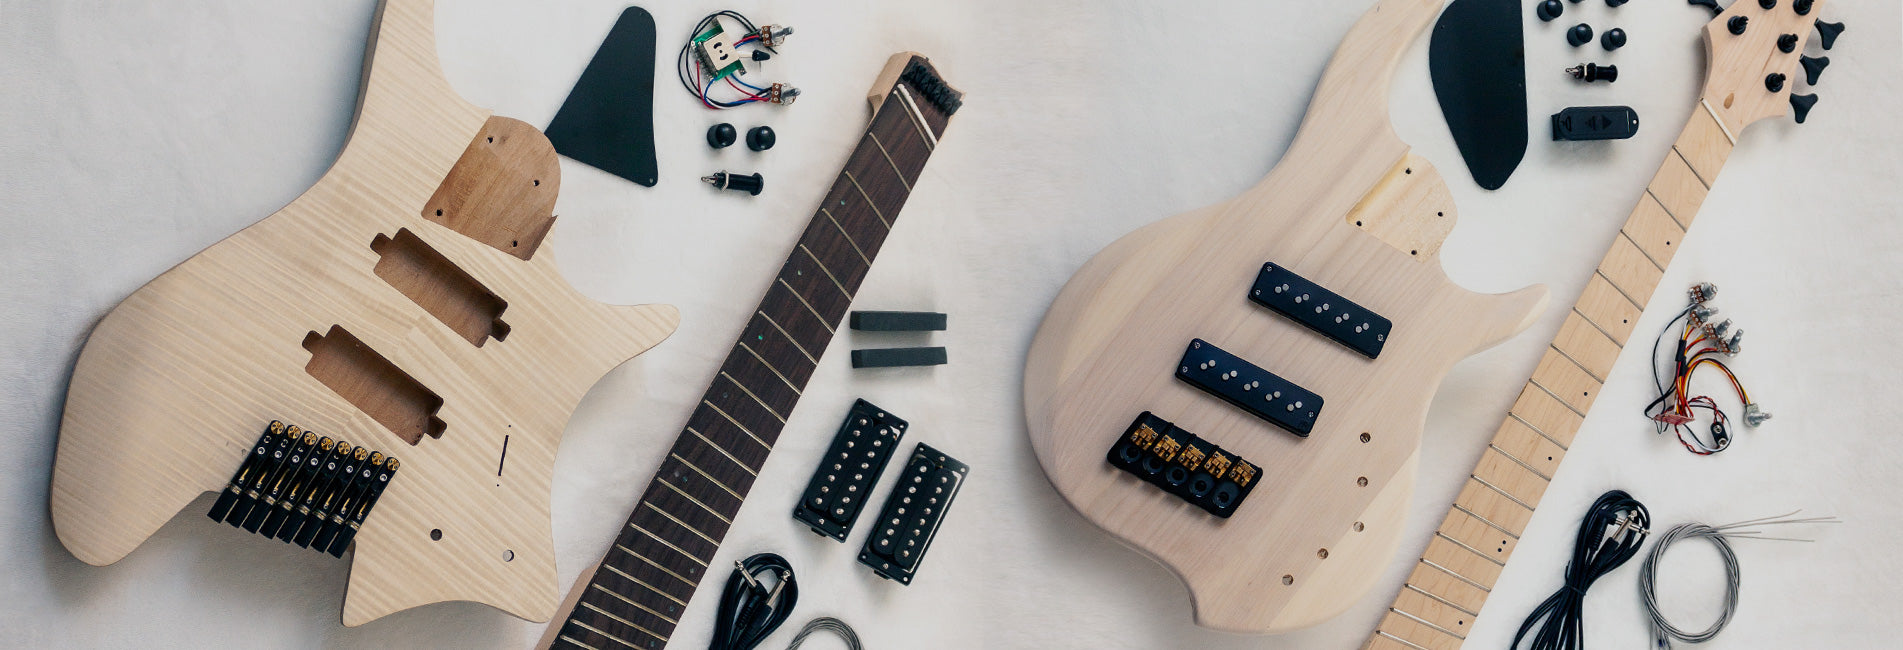 Guitar Kits for Building Electric & Bass Guitars